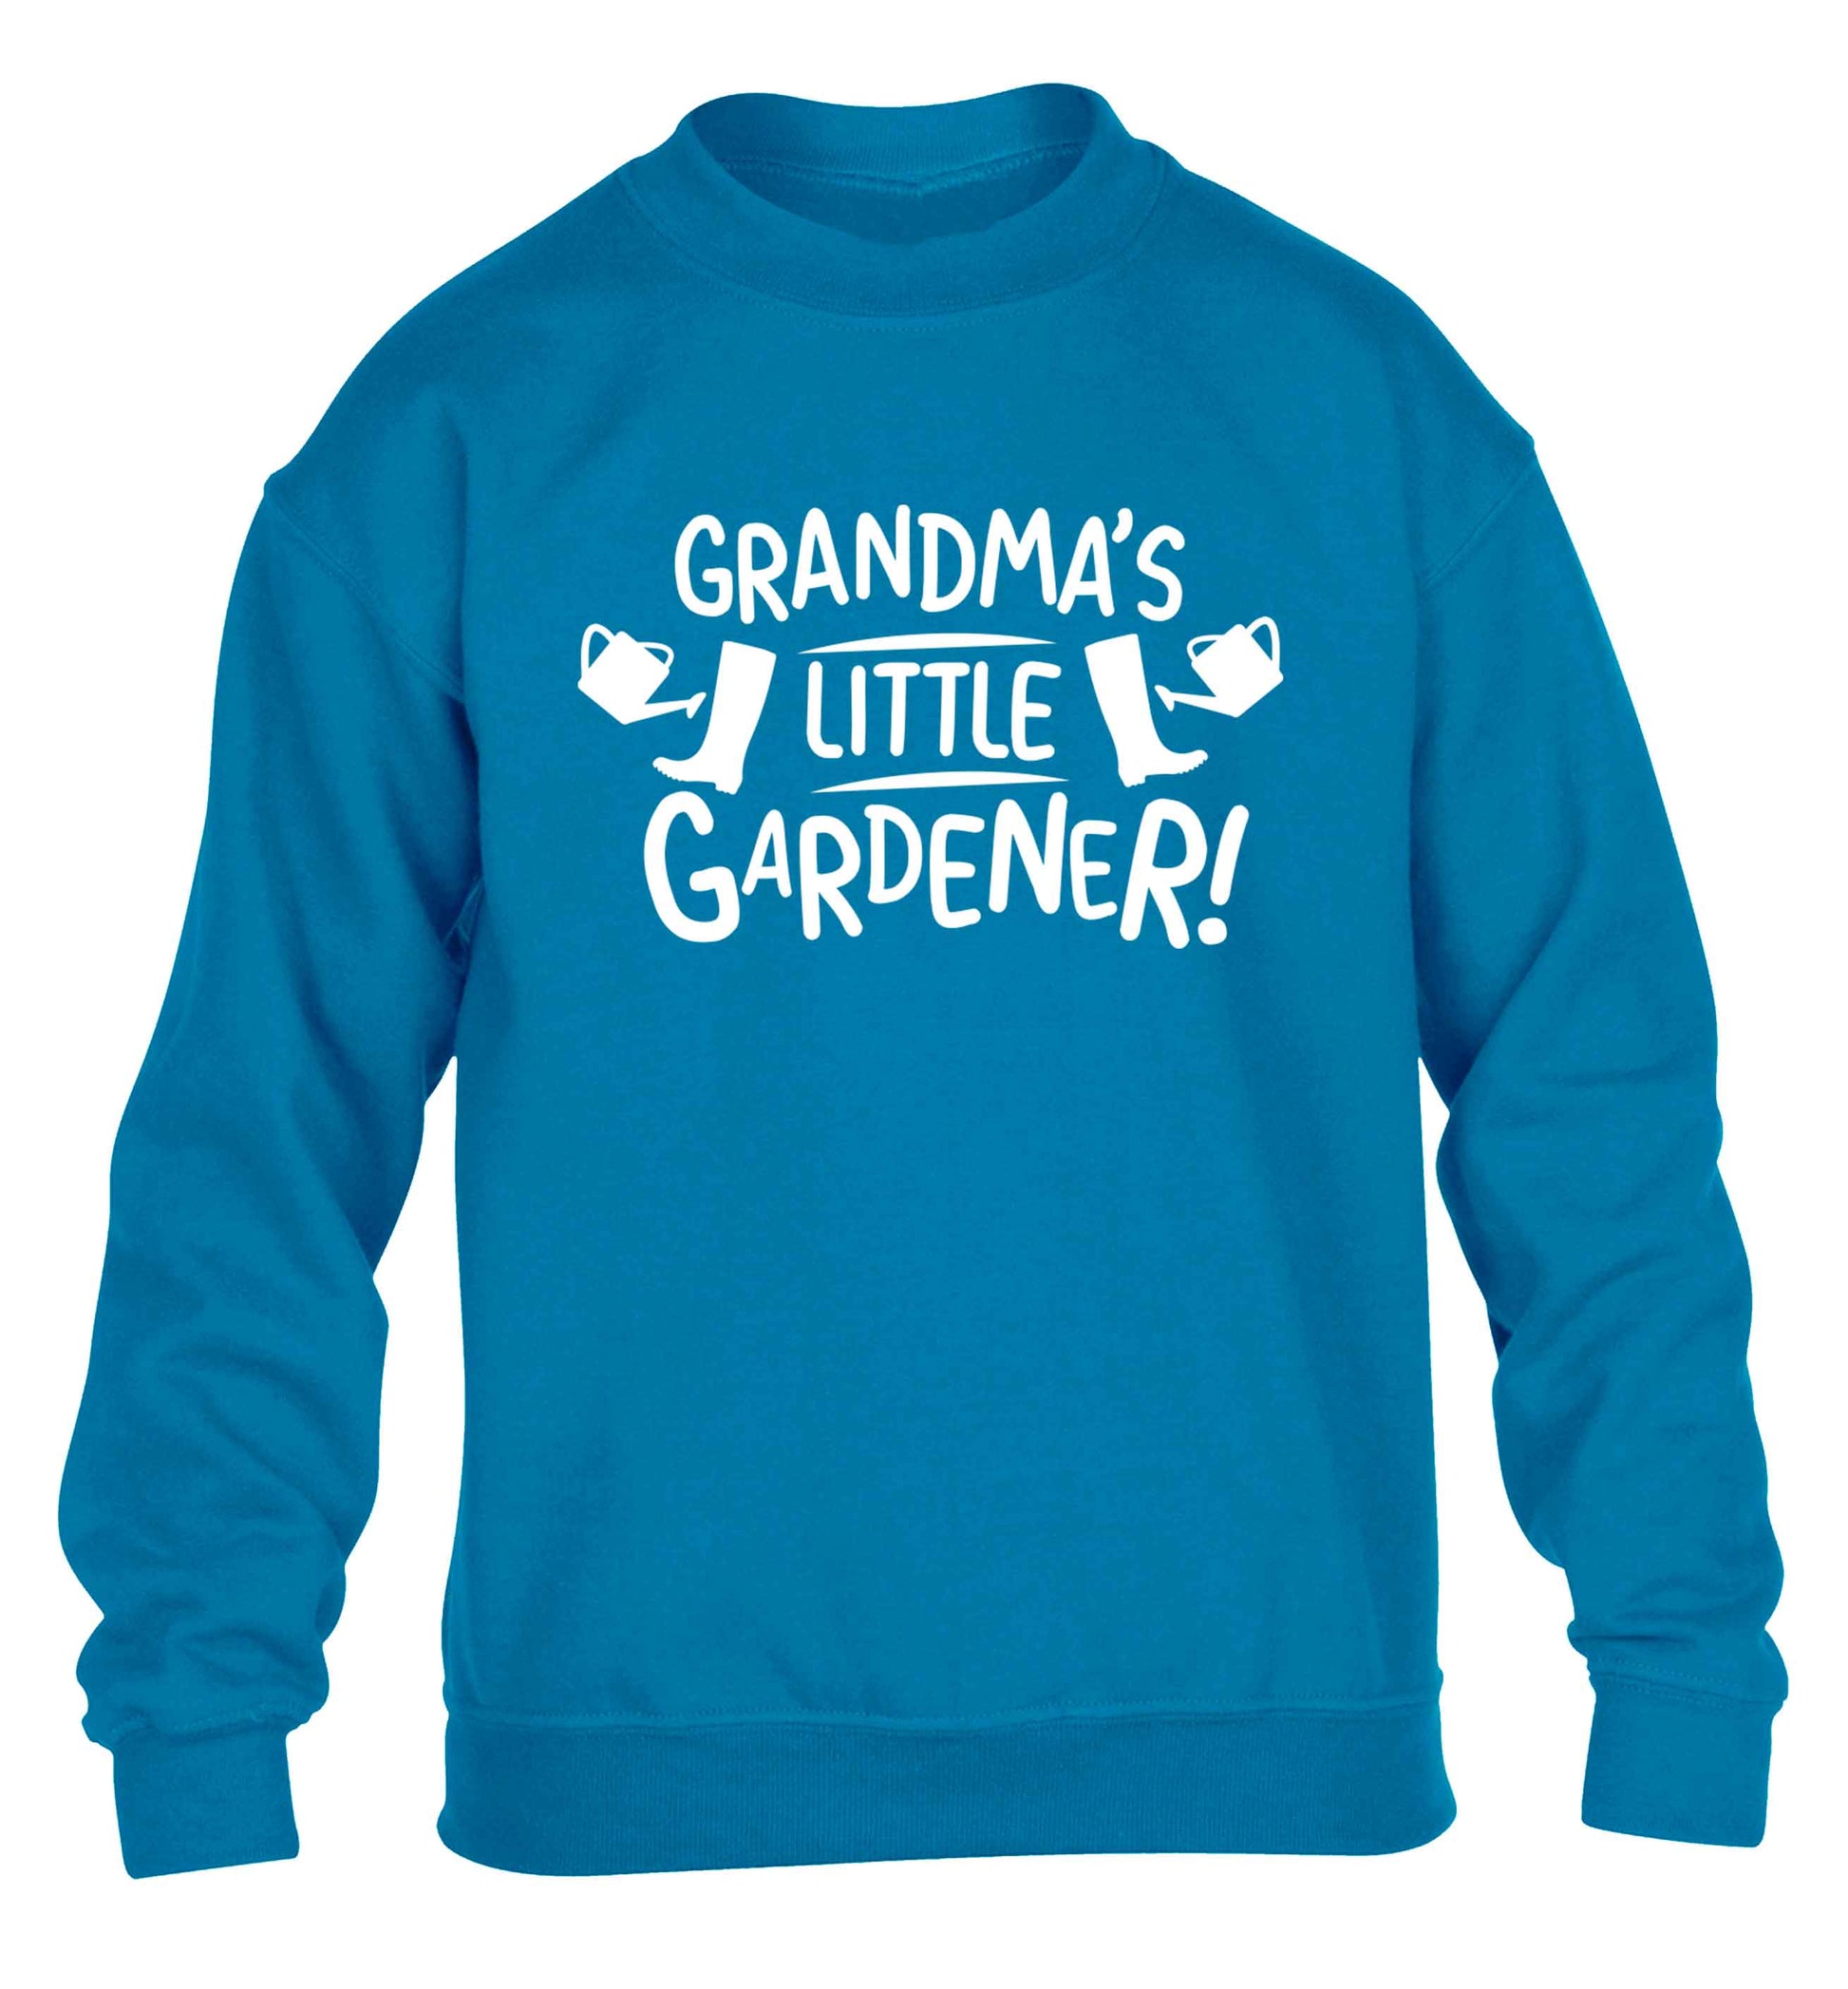 Grandma's little gardener children's blue sweater 12-13 Years